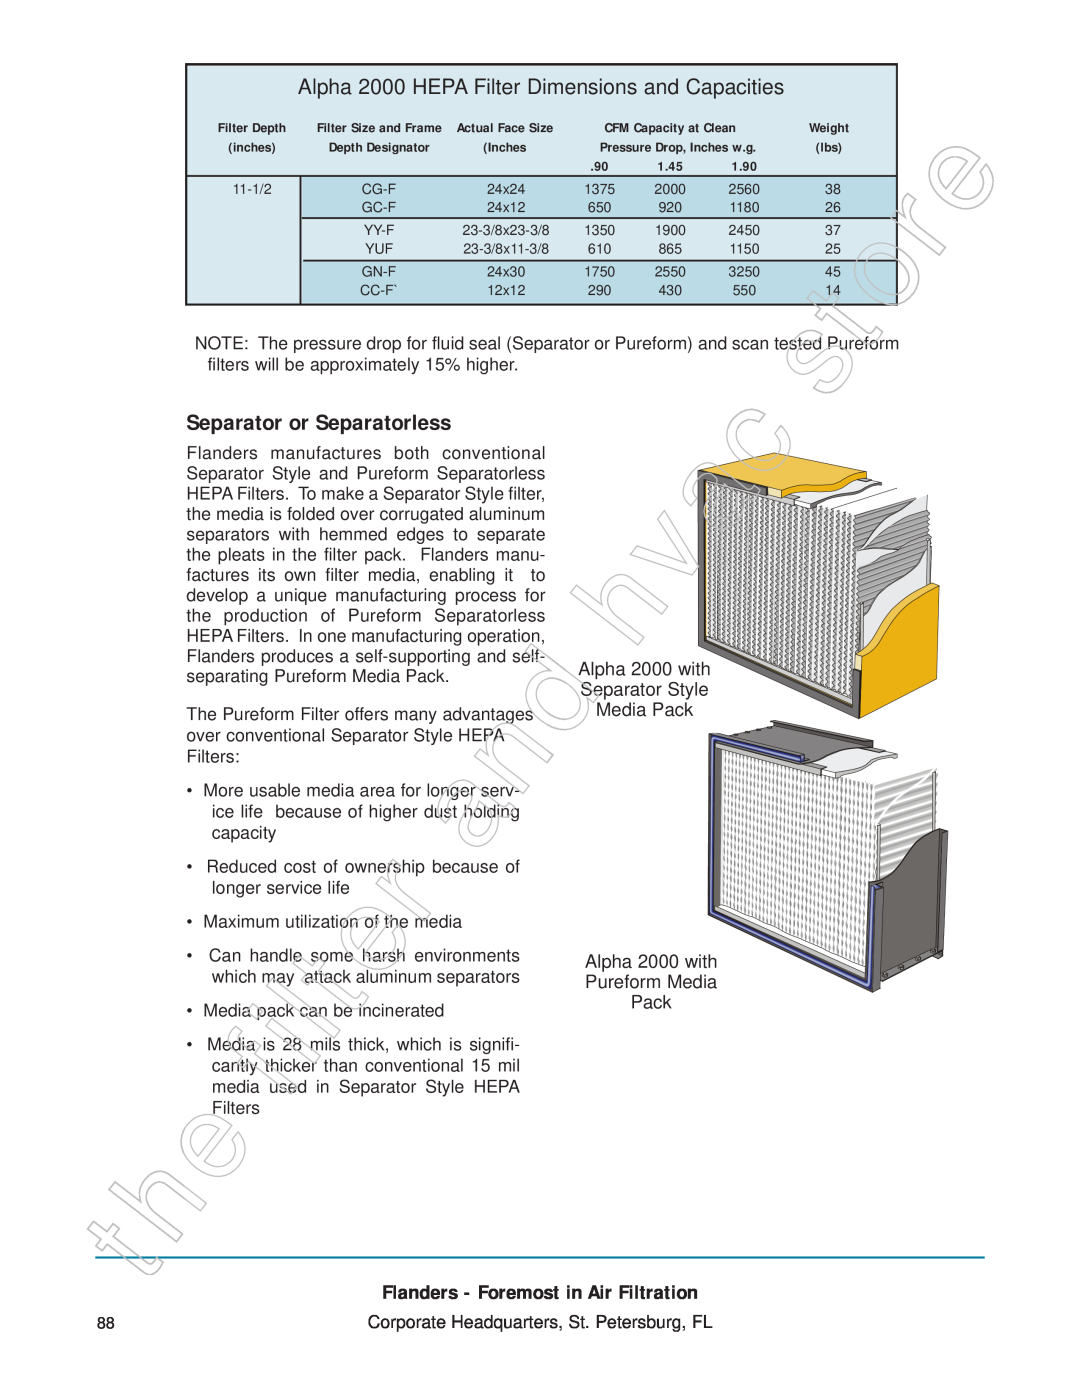 Honeywell 11255 manual Separator or Separatorless, Alpha 2000 HEPA Filter Dimensions and Capacities 